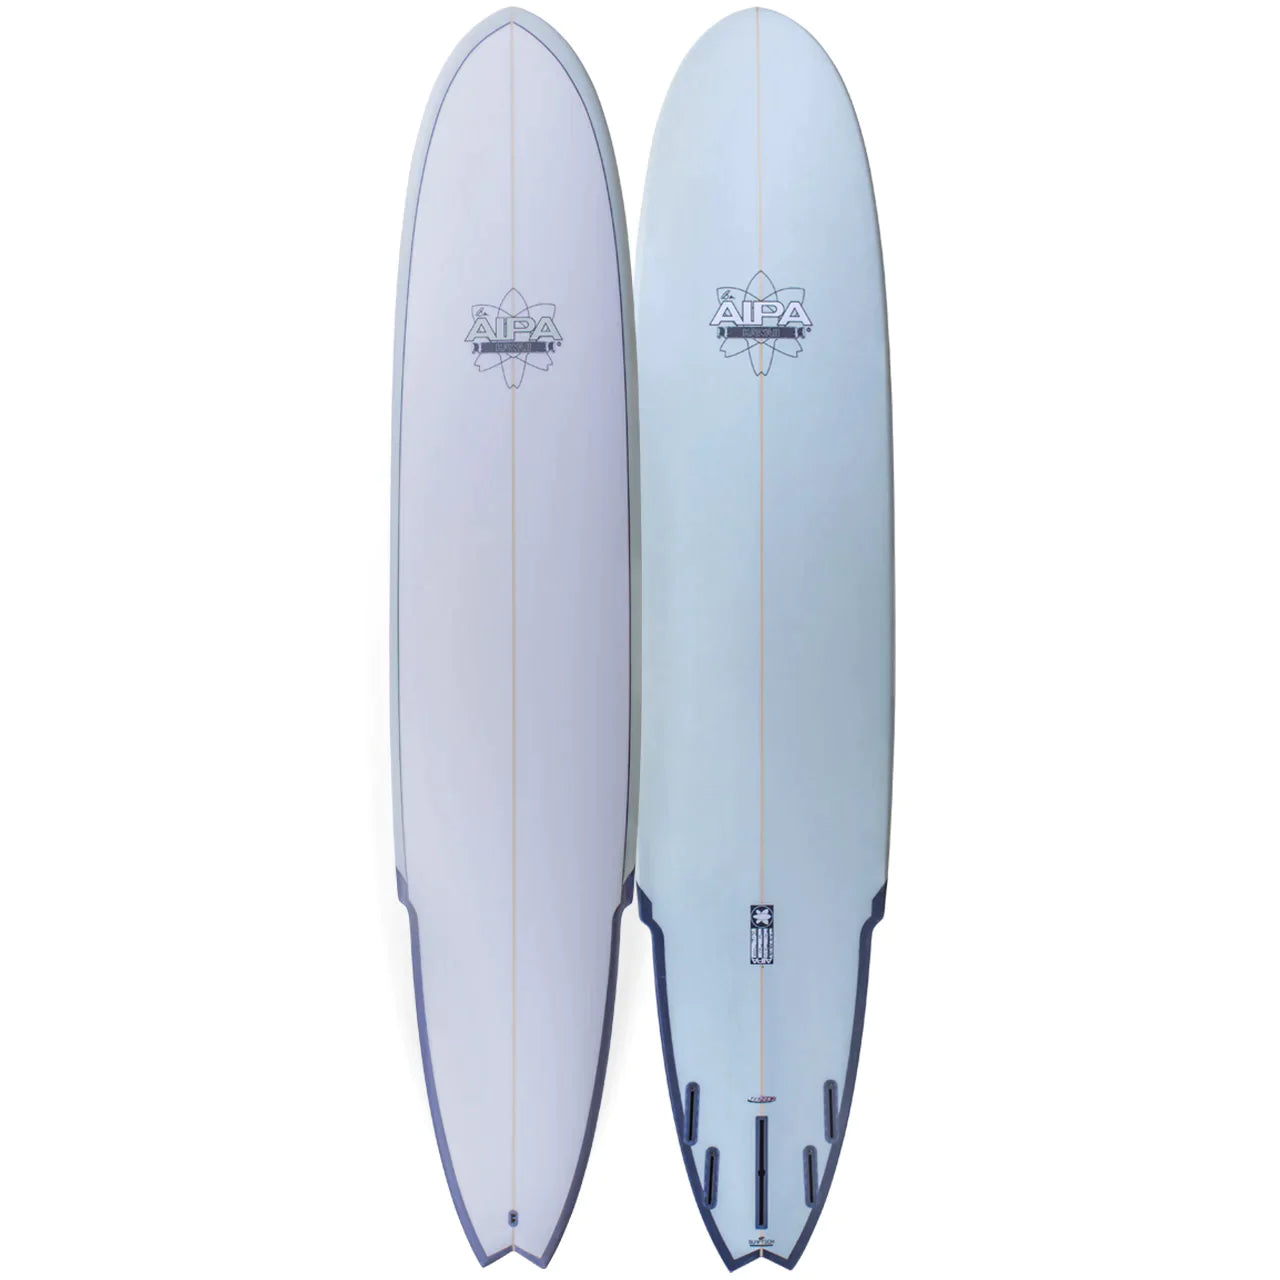 Sexwax Air Freshner – Robert August Surf Company